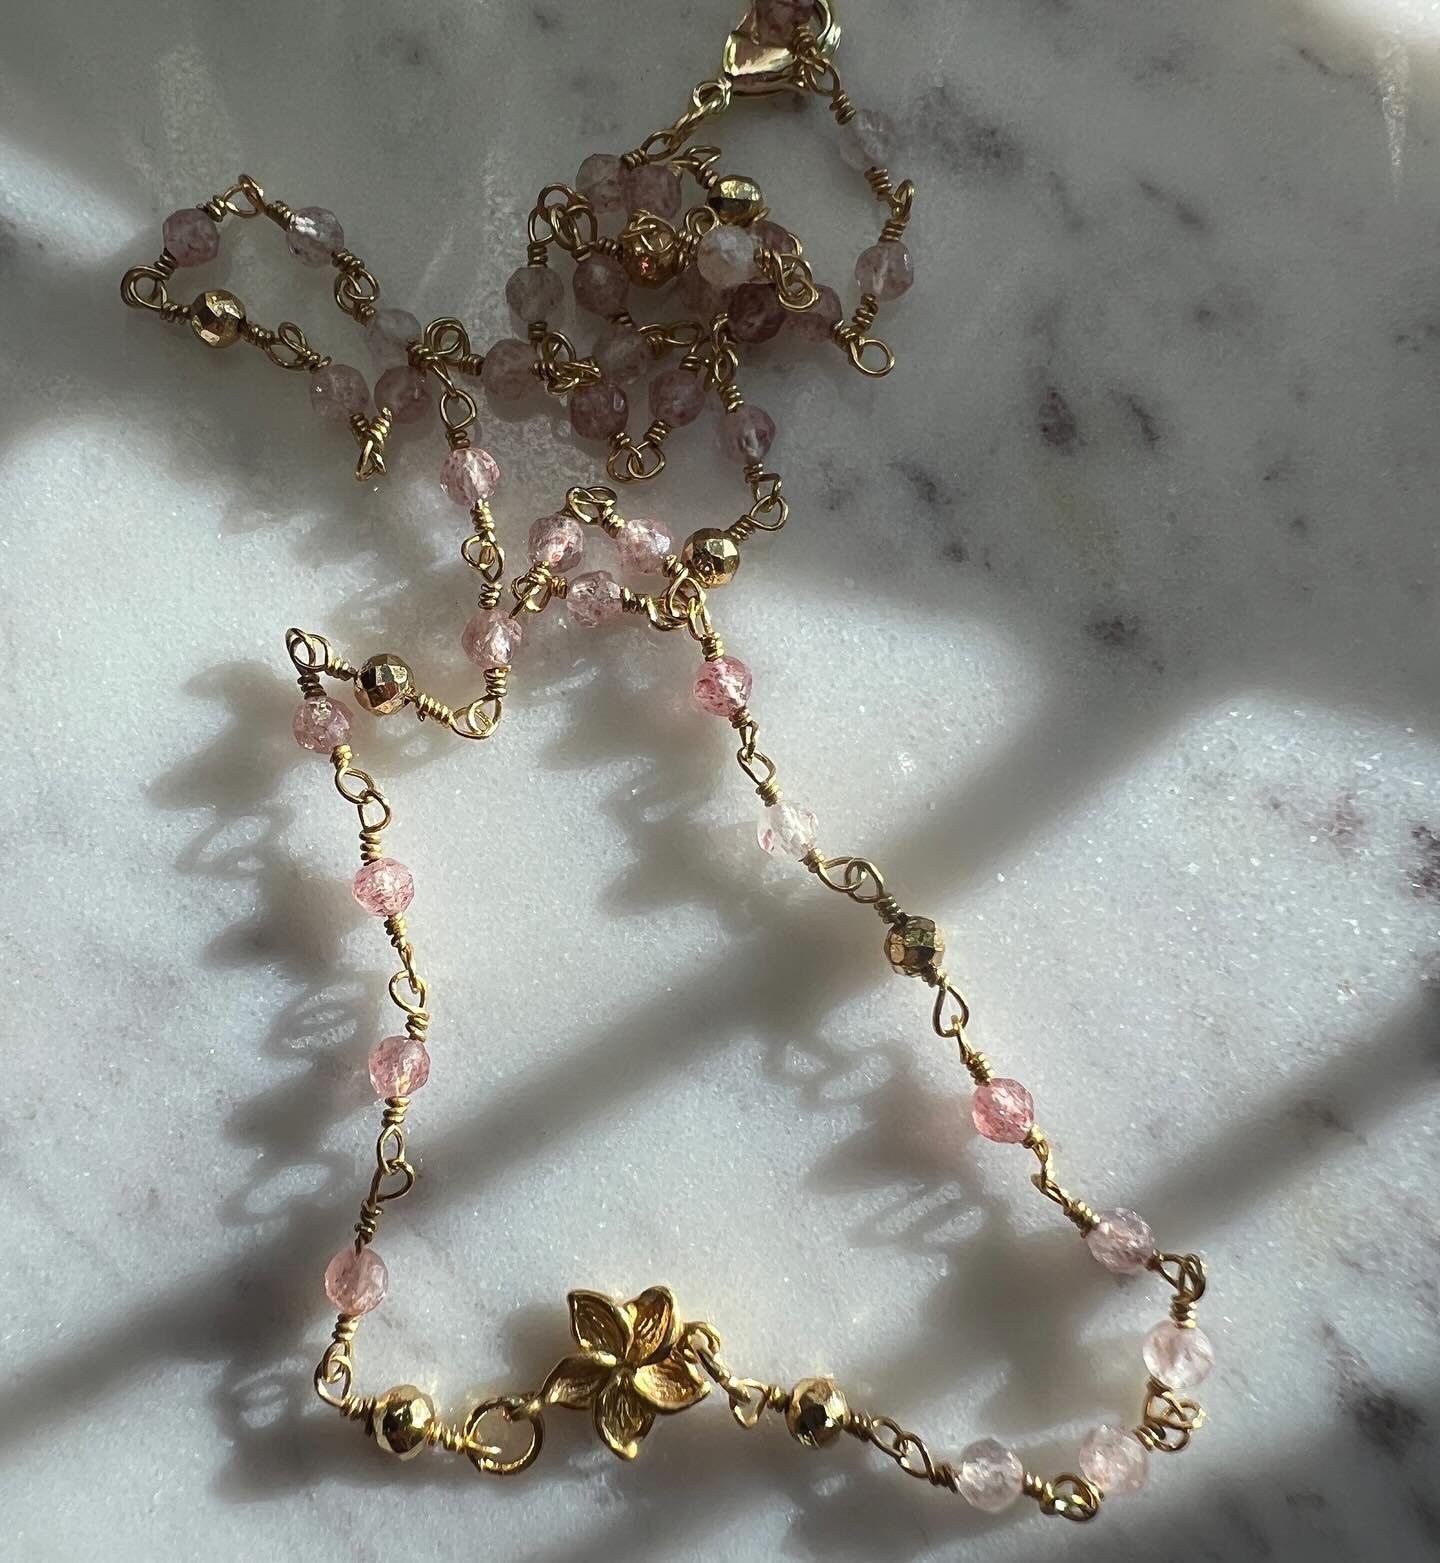 Petite plumeria. 

Strawberry Quartz. 

Pyrite. 

Coming soon. 

#necklace #plumeria #flowers #mothernature #trendyjewelry #trends #necklacestack #neckpiece #weddings #neckmess #jewelryoftheday #fashionjewelry #jewelryaddict